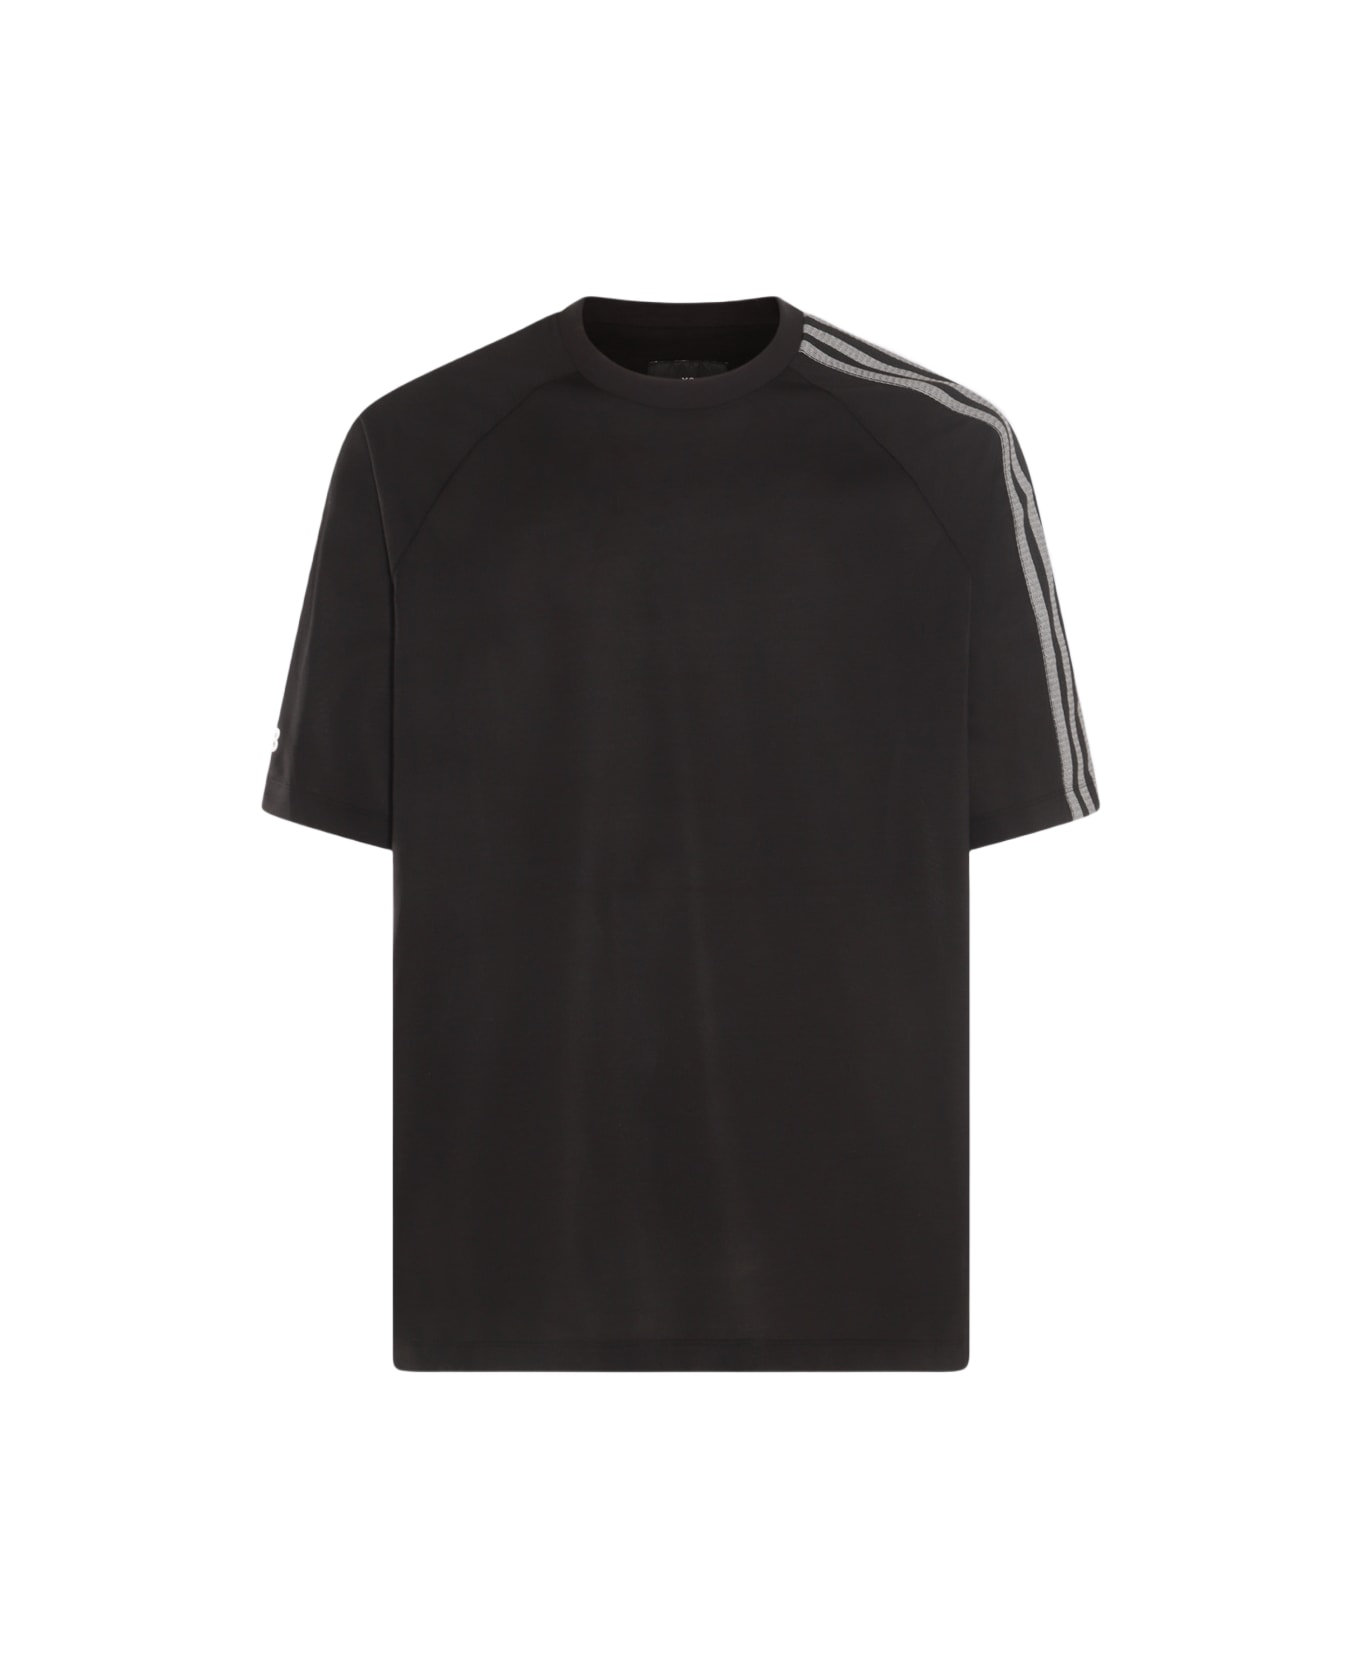 Y-3 Black And Grey Cotton T-shirt - Black